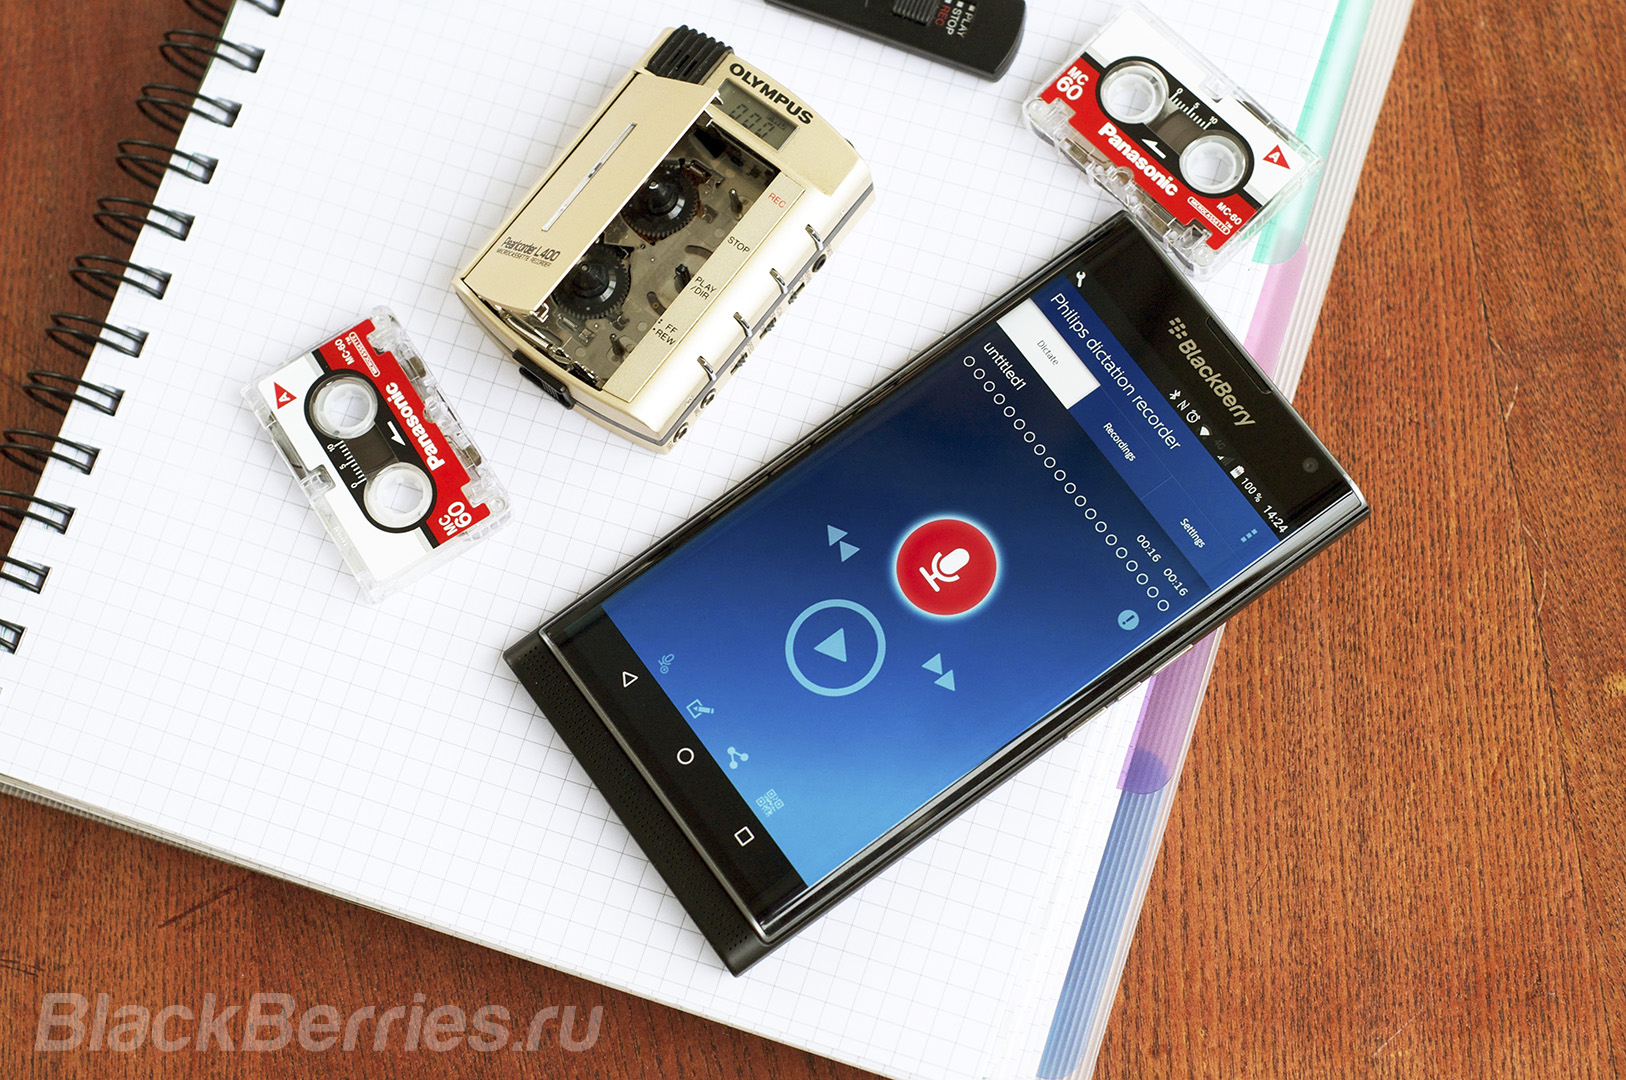 BlackBerry-Android-Recorder-10.jpg